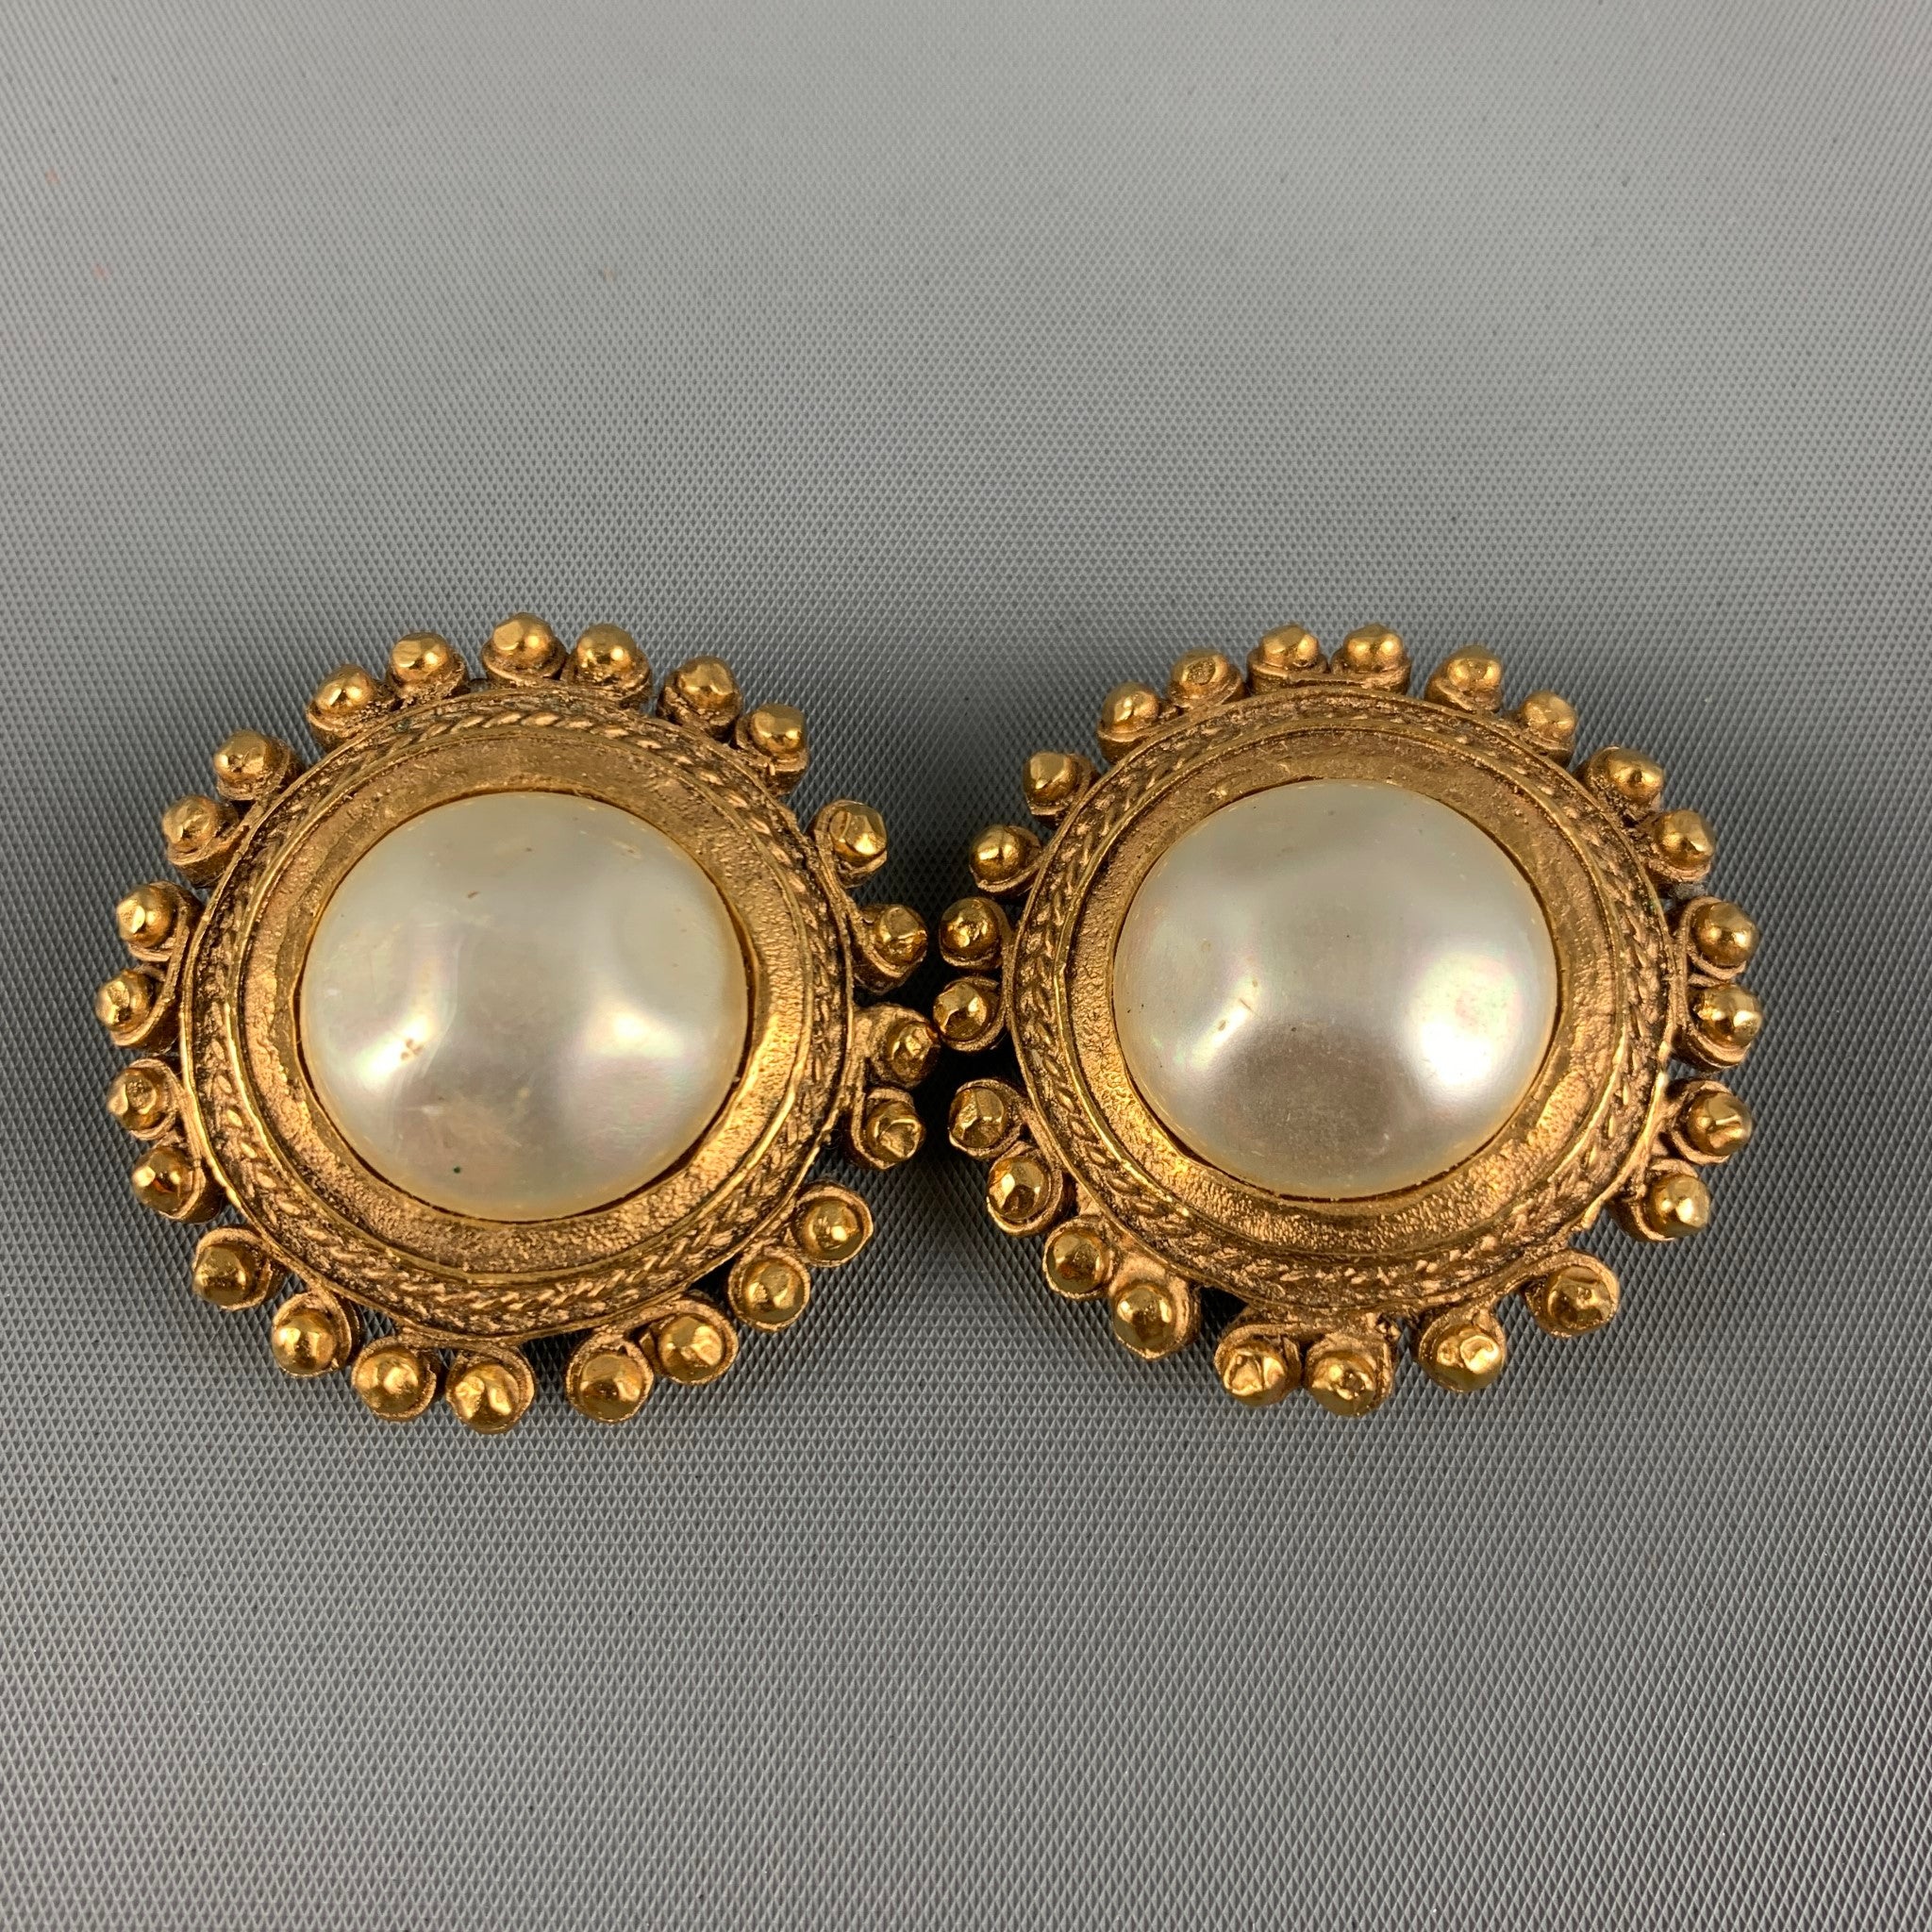 chanel gold pearl earrings vintage